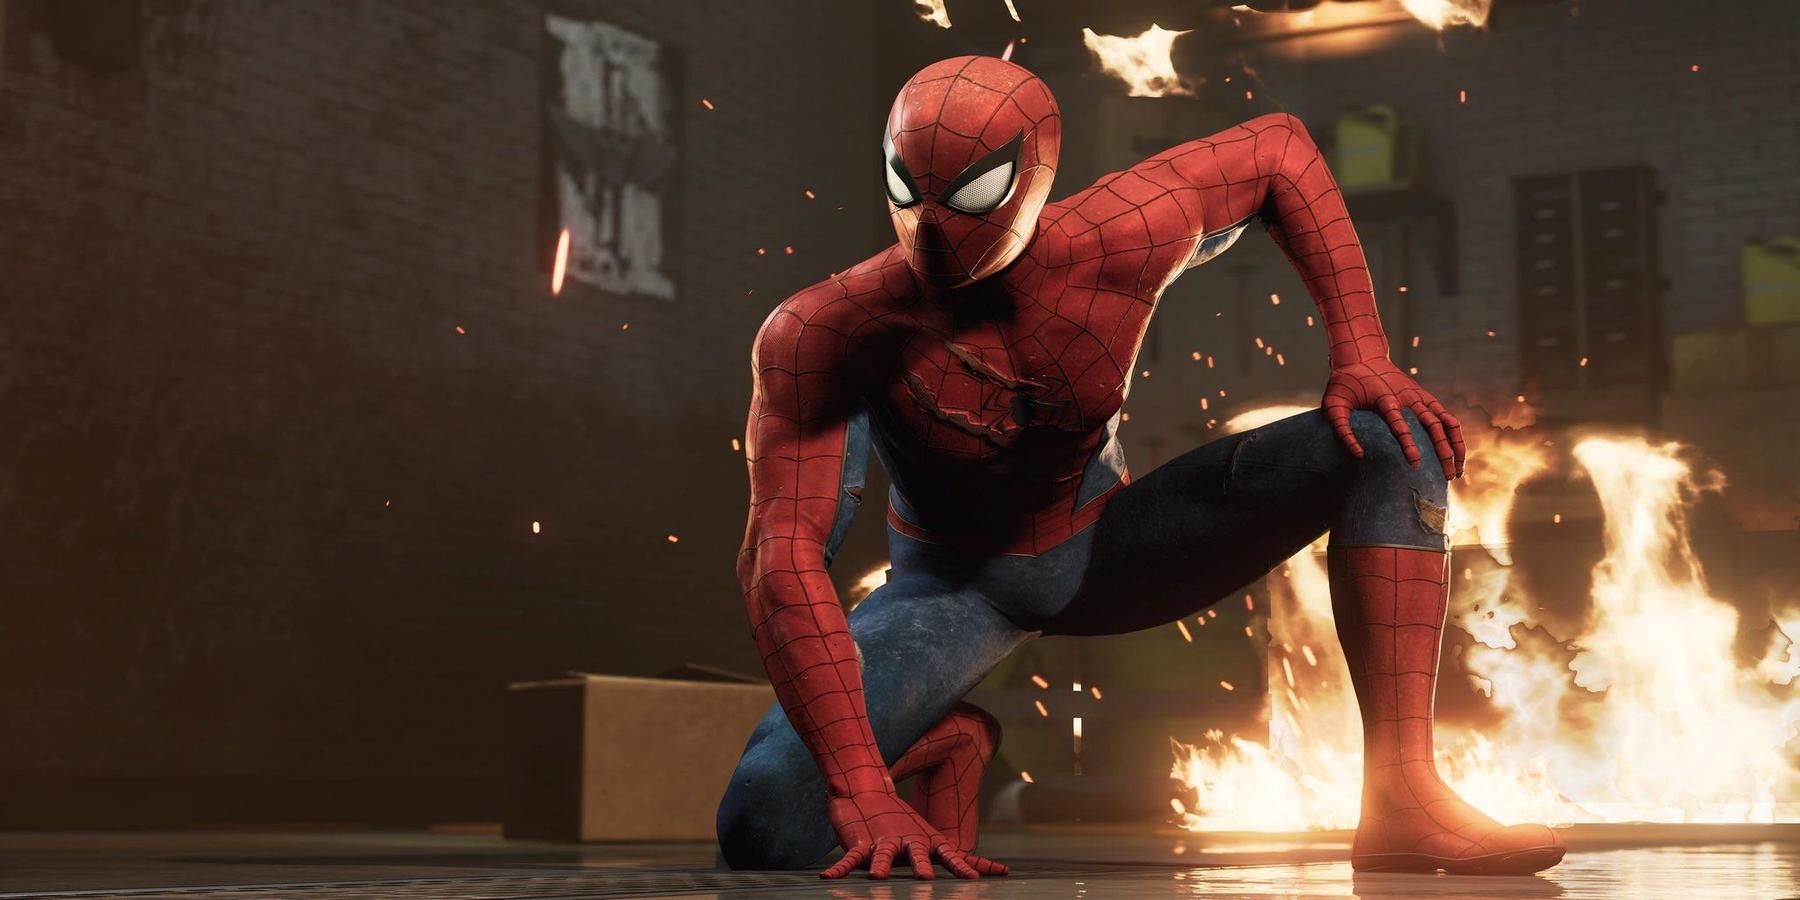 marvels-spider-man-damaed-suit-fire-crouch